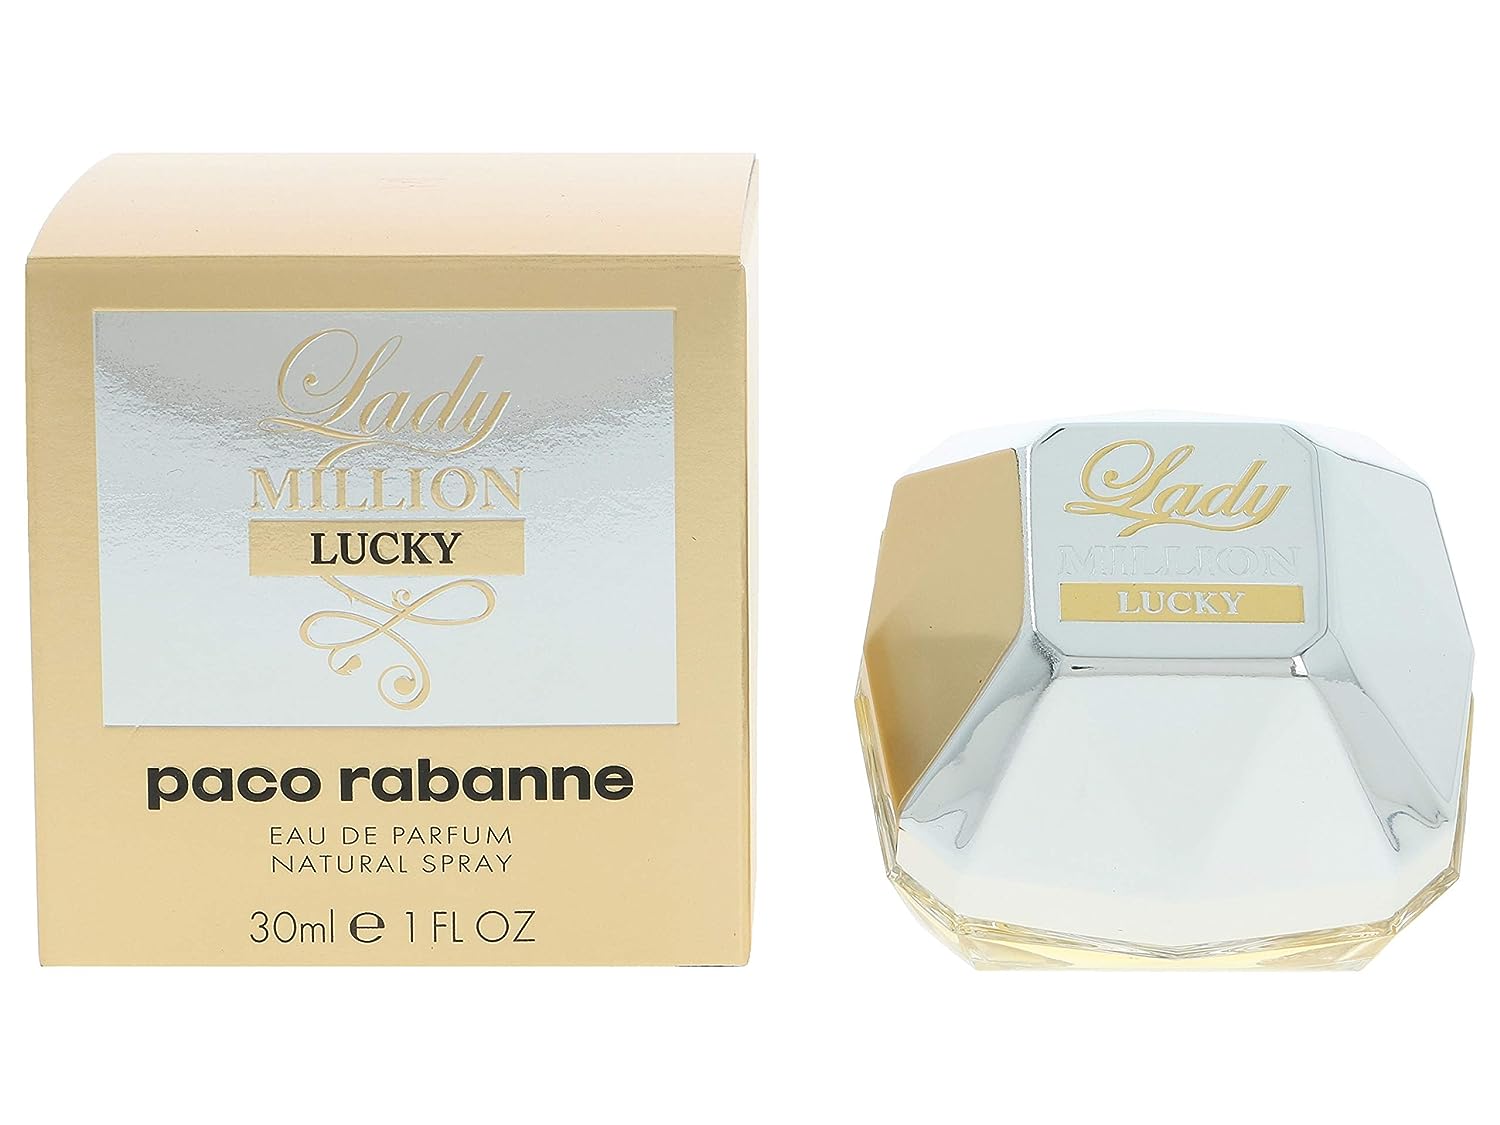 Lady Million Lucky by Paco Rabanne Eau de Parfum Spray 30ml